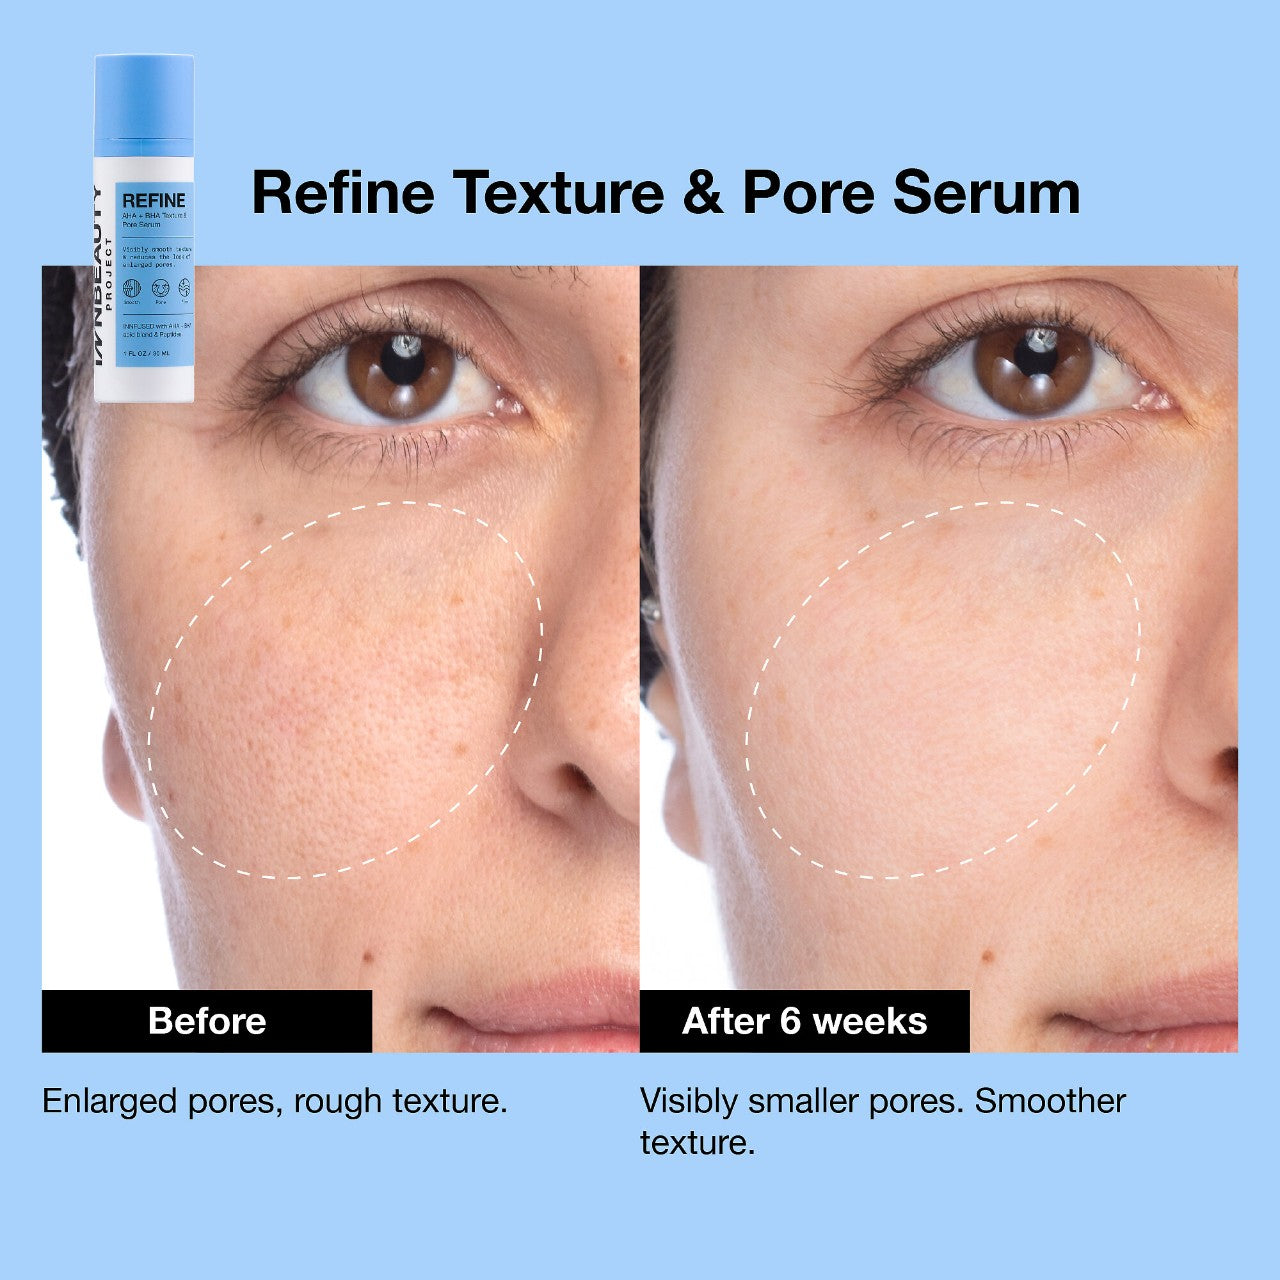 iNNBEAUTY PROJECT | Refine AHA + BHA Texture & Pore Serum